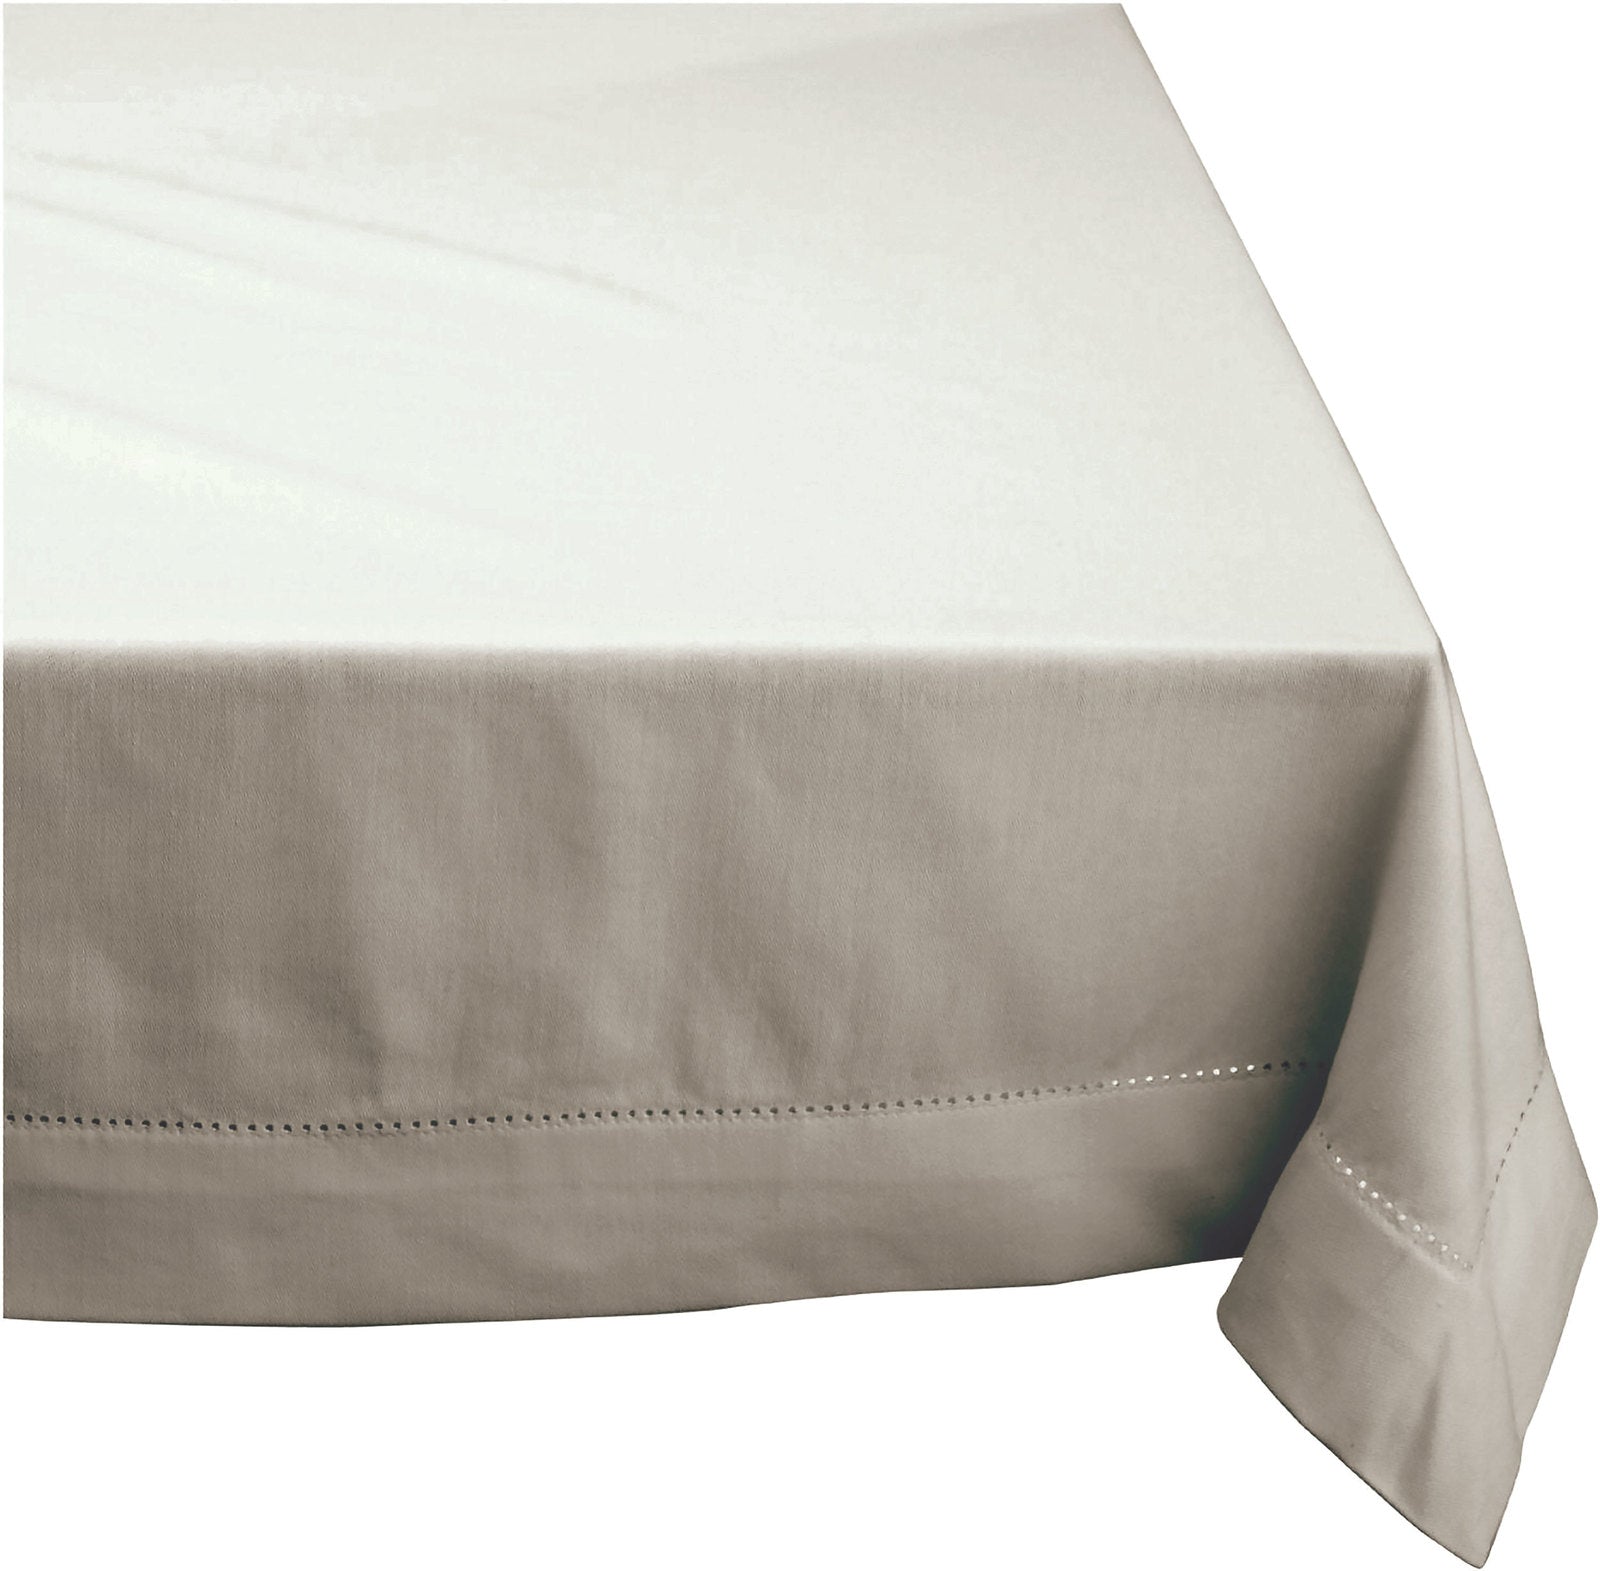 Elegant Hemstitch Tablecloth - 100% Cotton 130cm x 360cm in White